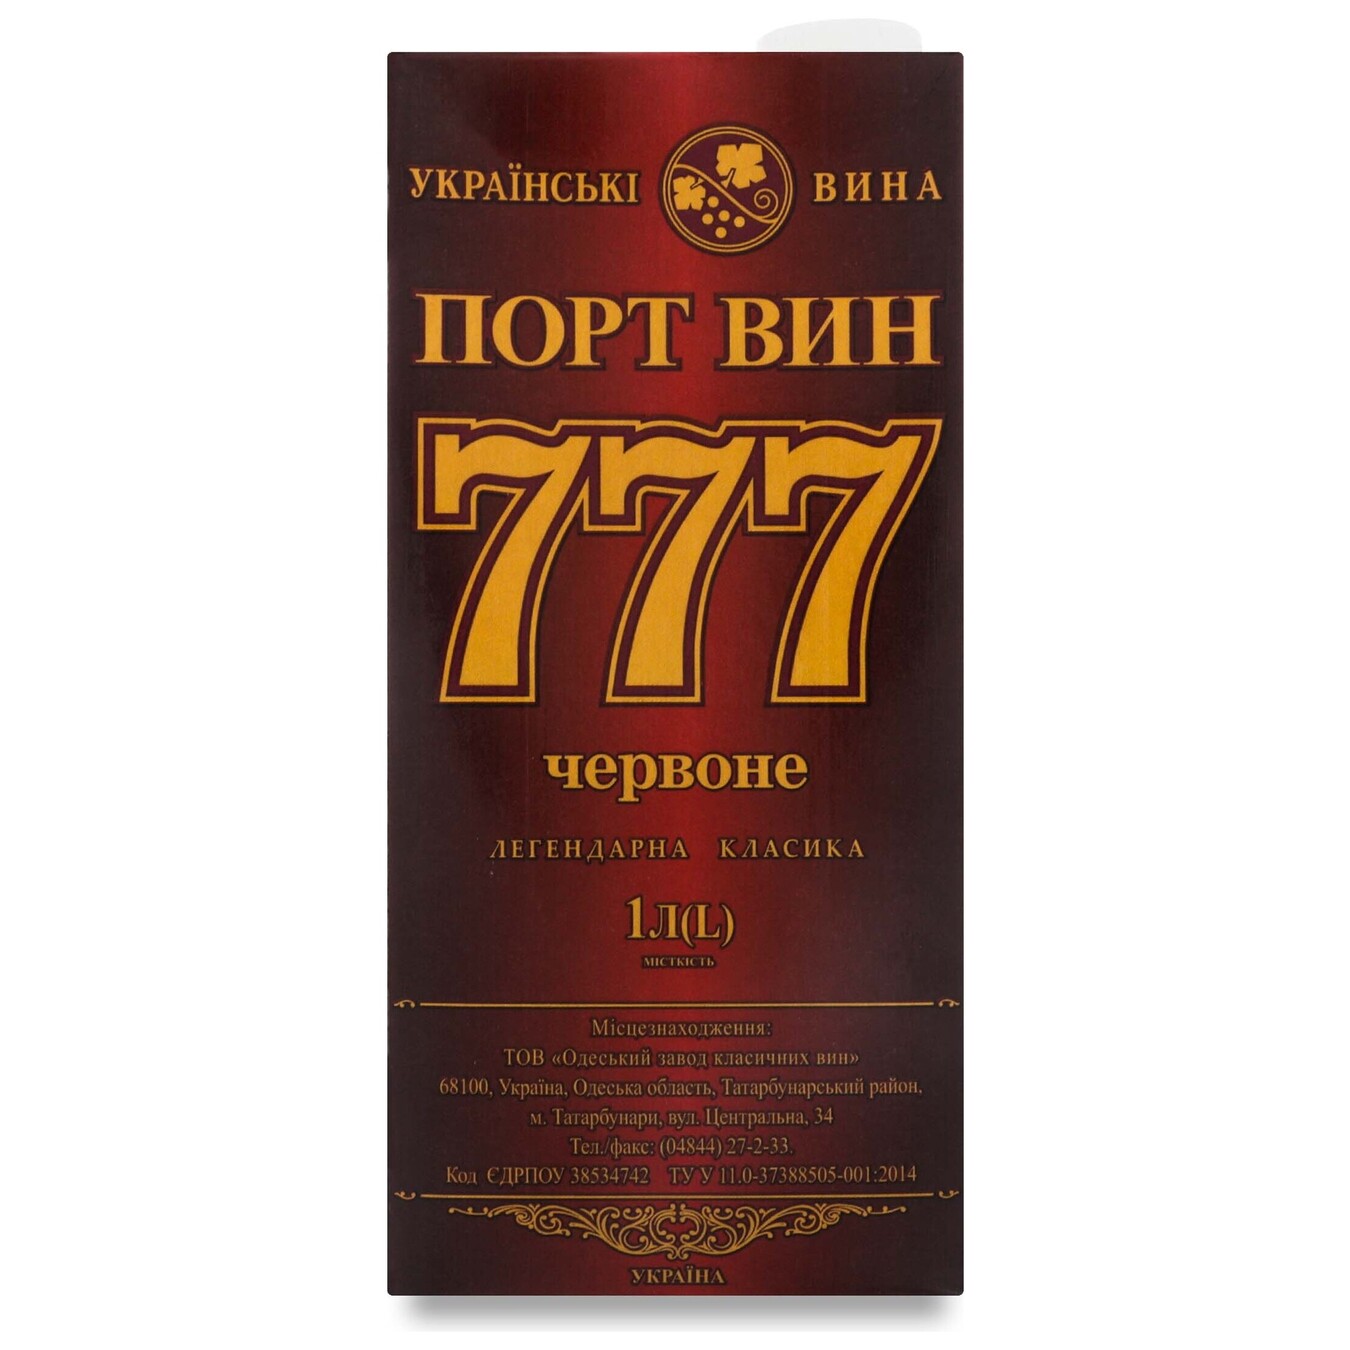 Вино Порт Вин 777 красное 14,5% 1л